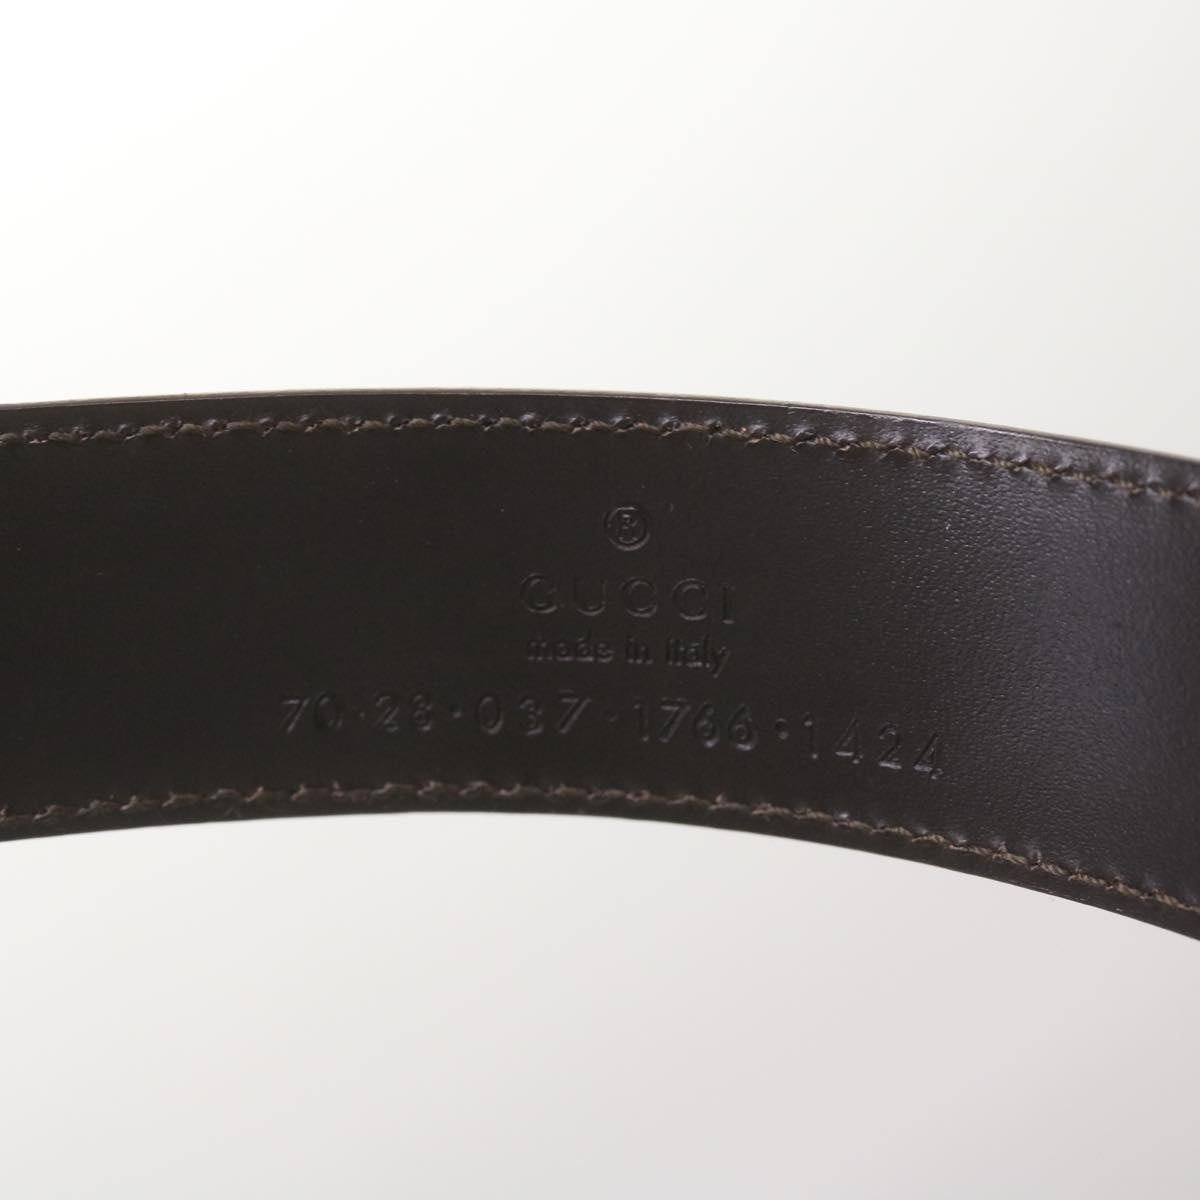 GUCCI Belt Leather 32.3"" Gold Tone 70 28 037 1766 1424 Auth hk1107